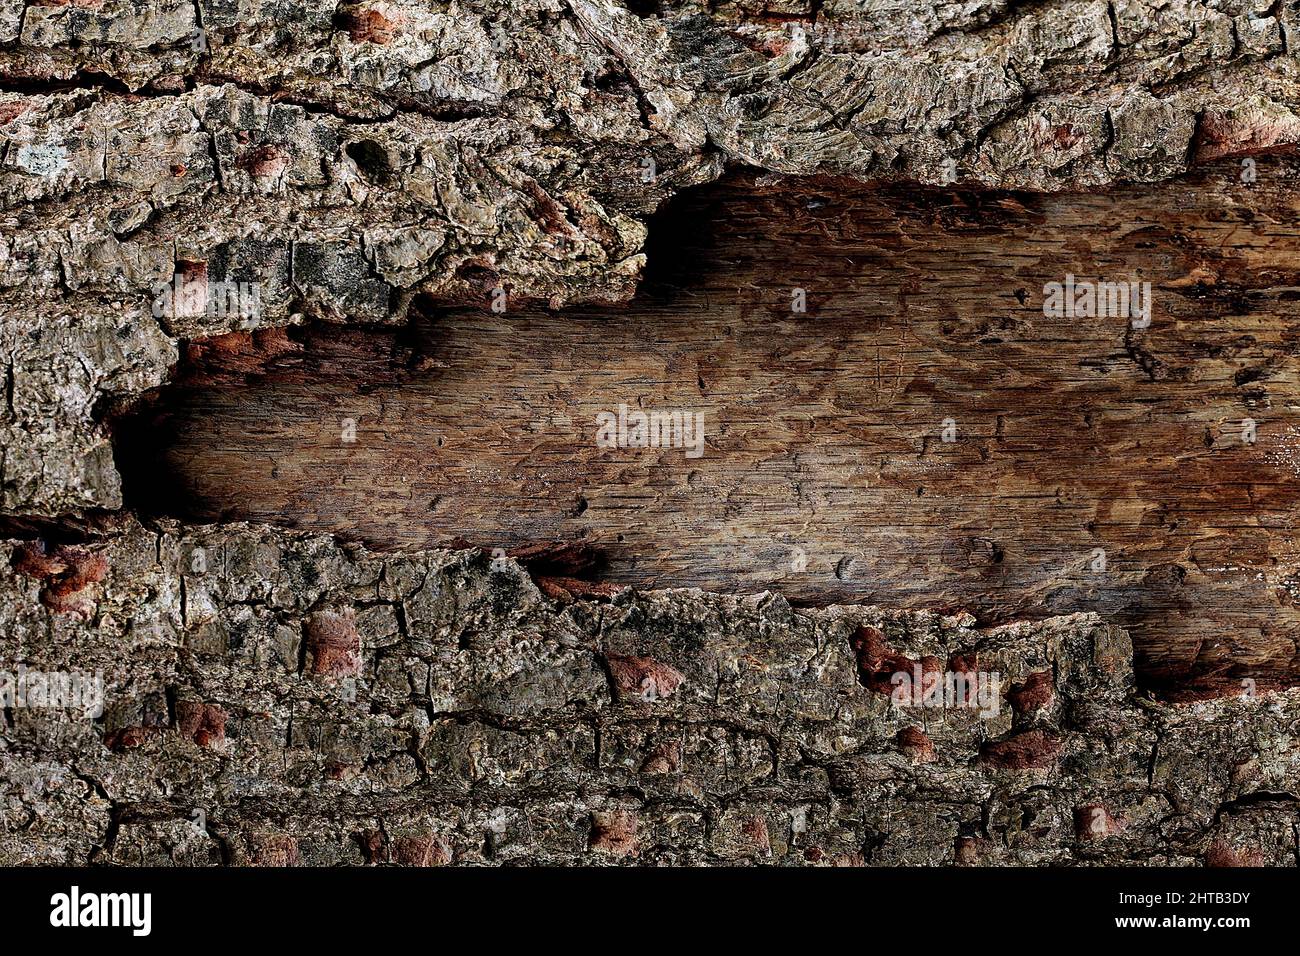 Closeup shot of Rosellinia necatrix Fungus on wooden texture tree branch Stock Photo